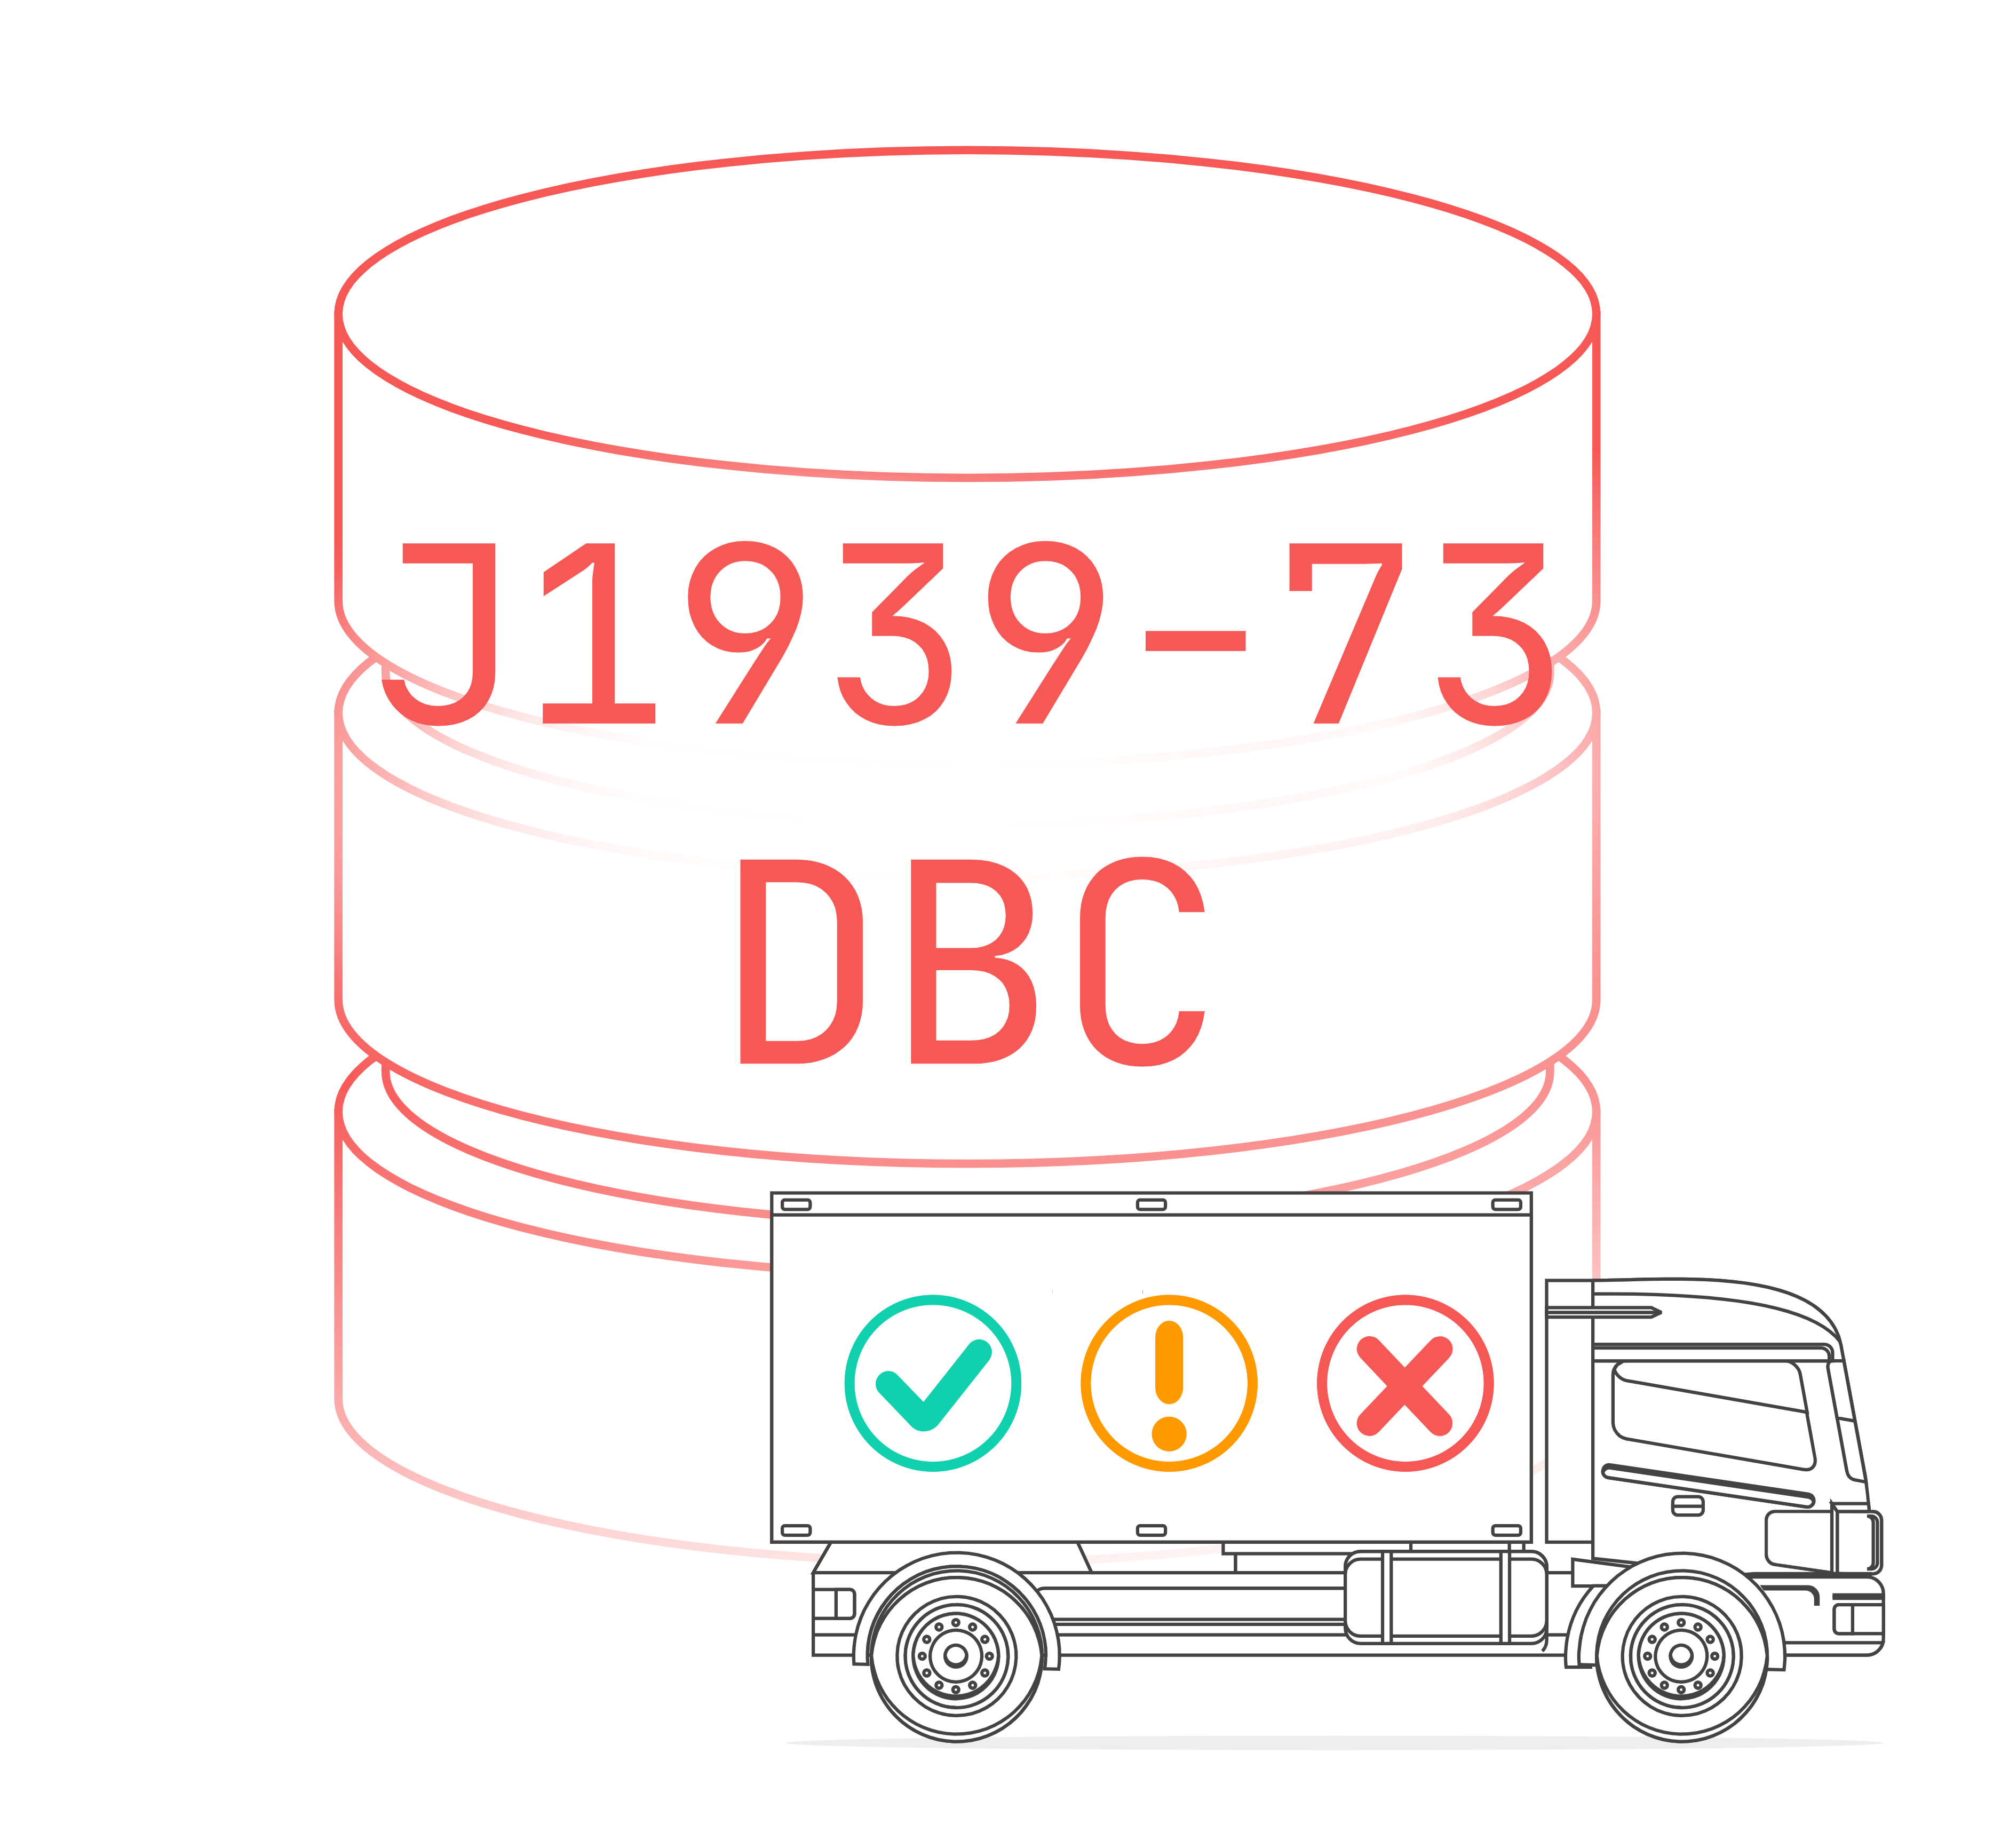 J1939-73 DBC file (DM1, DM2, ...)